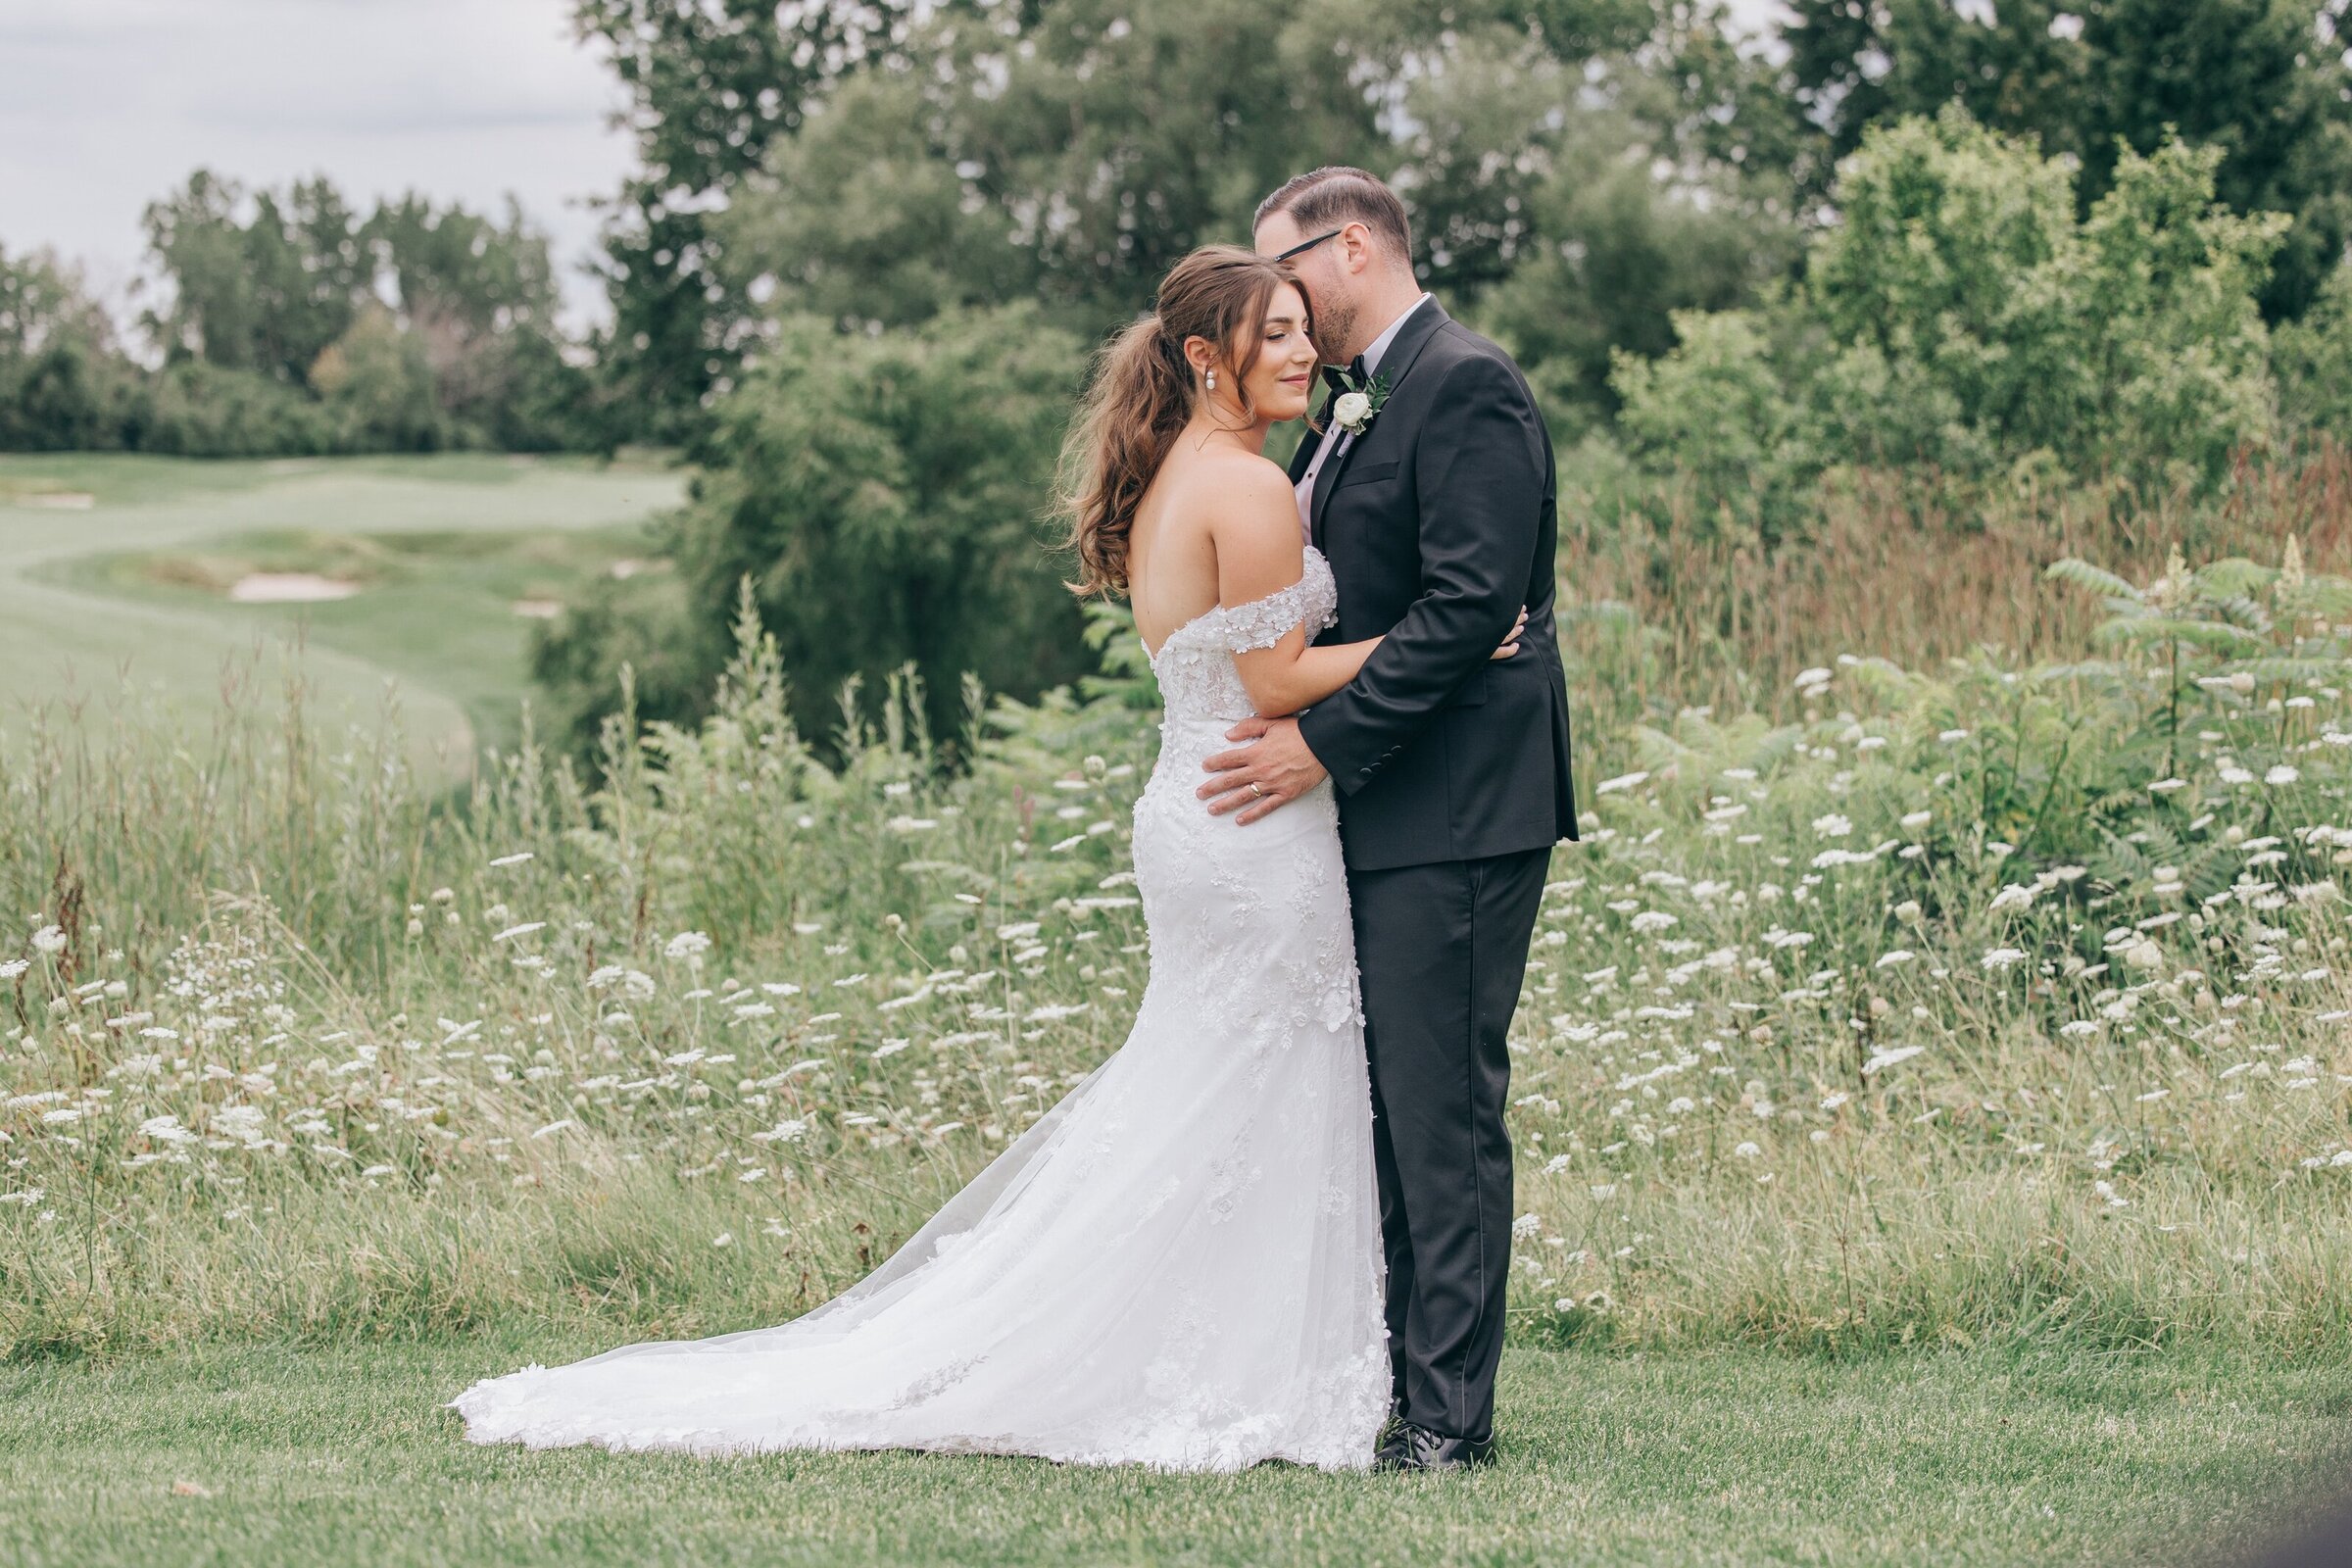 Firerock Golf Wedding Photographer - London Ontario - Nova Markina Photography058